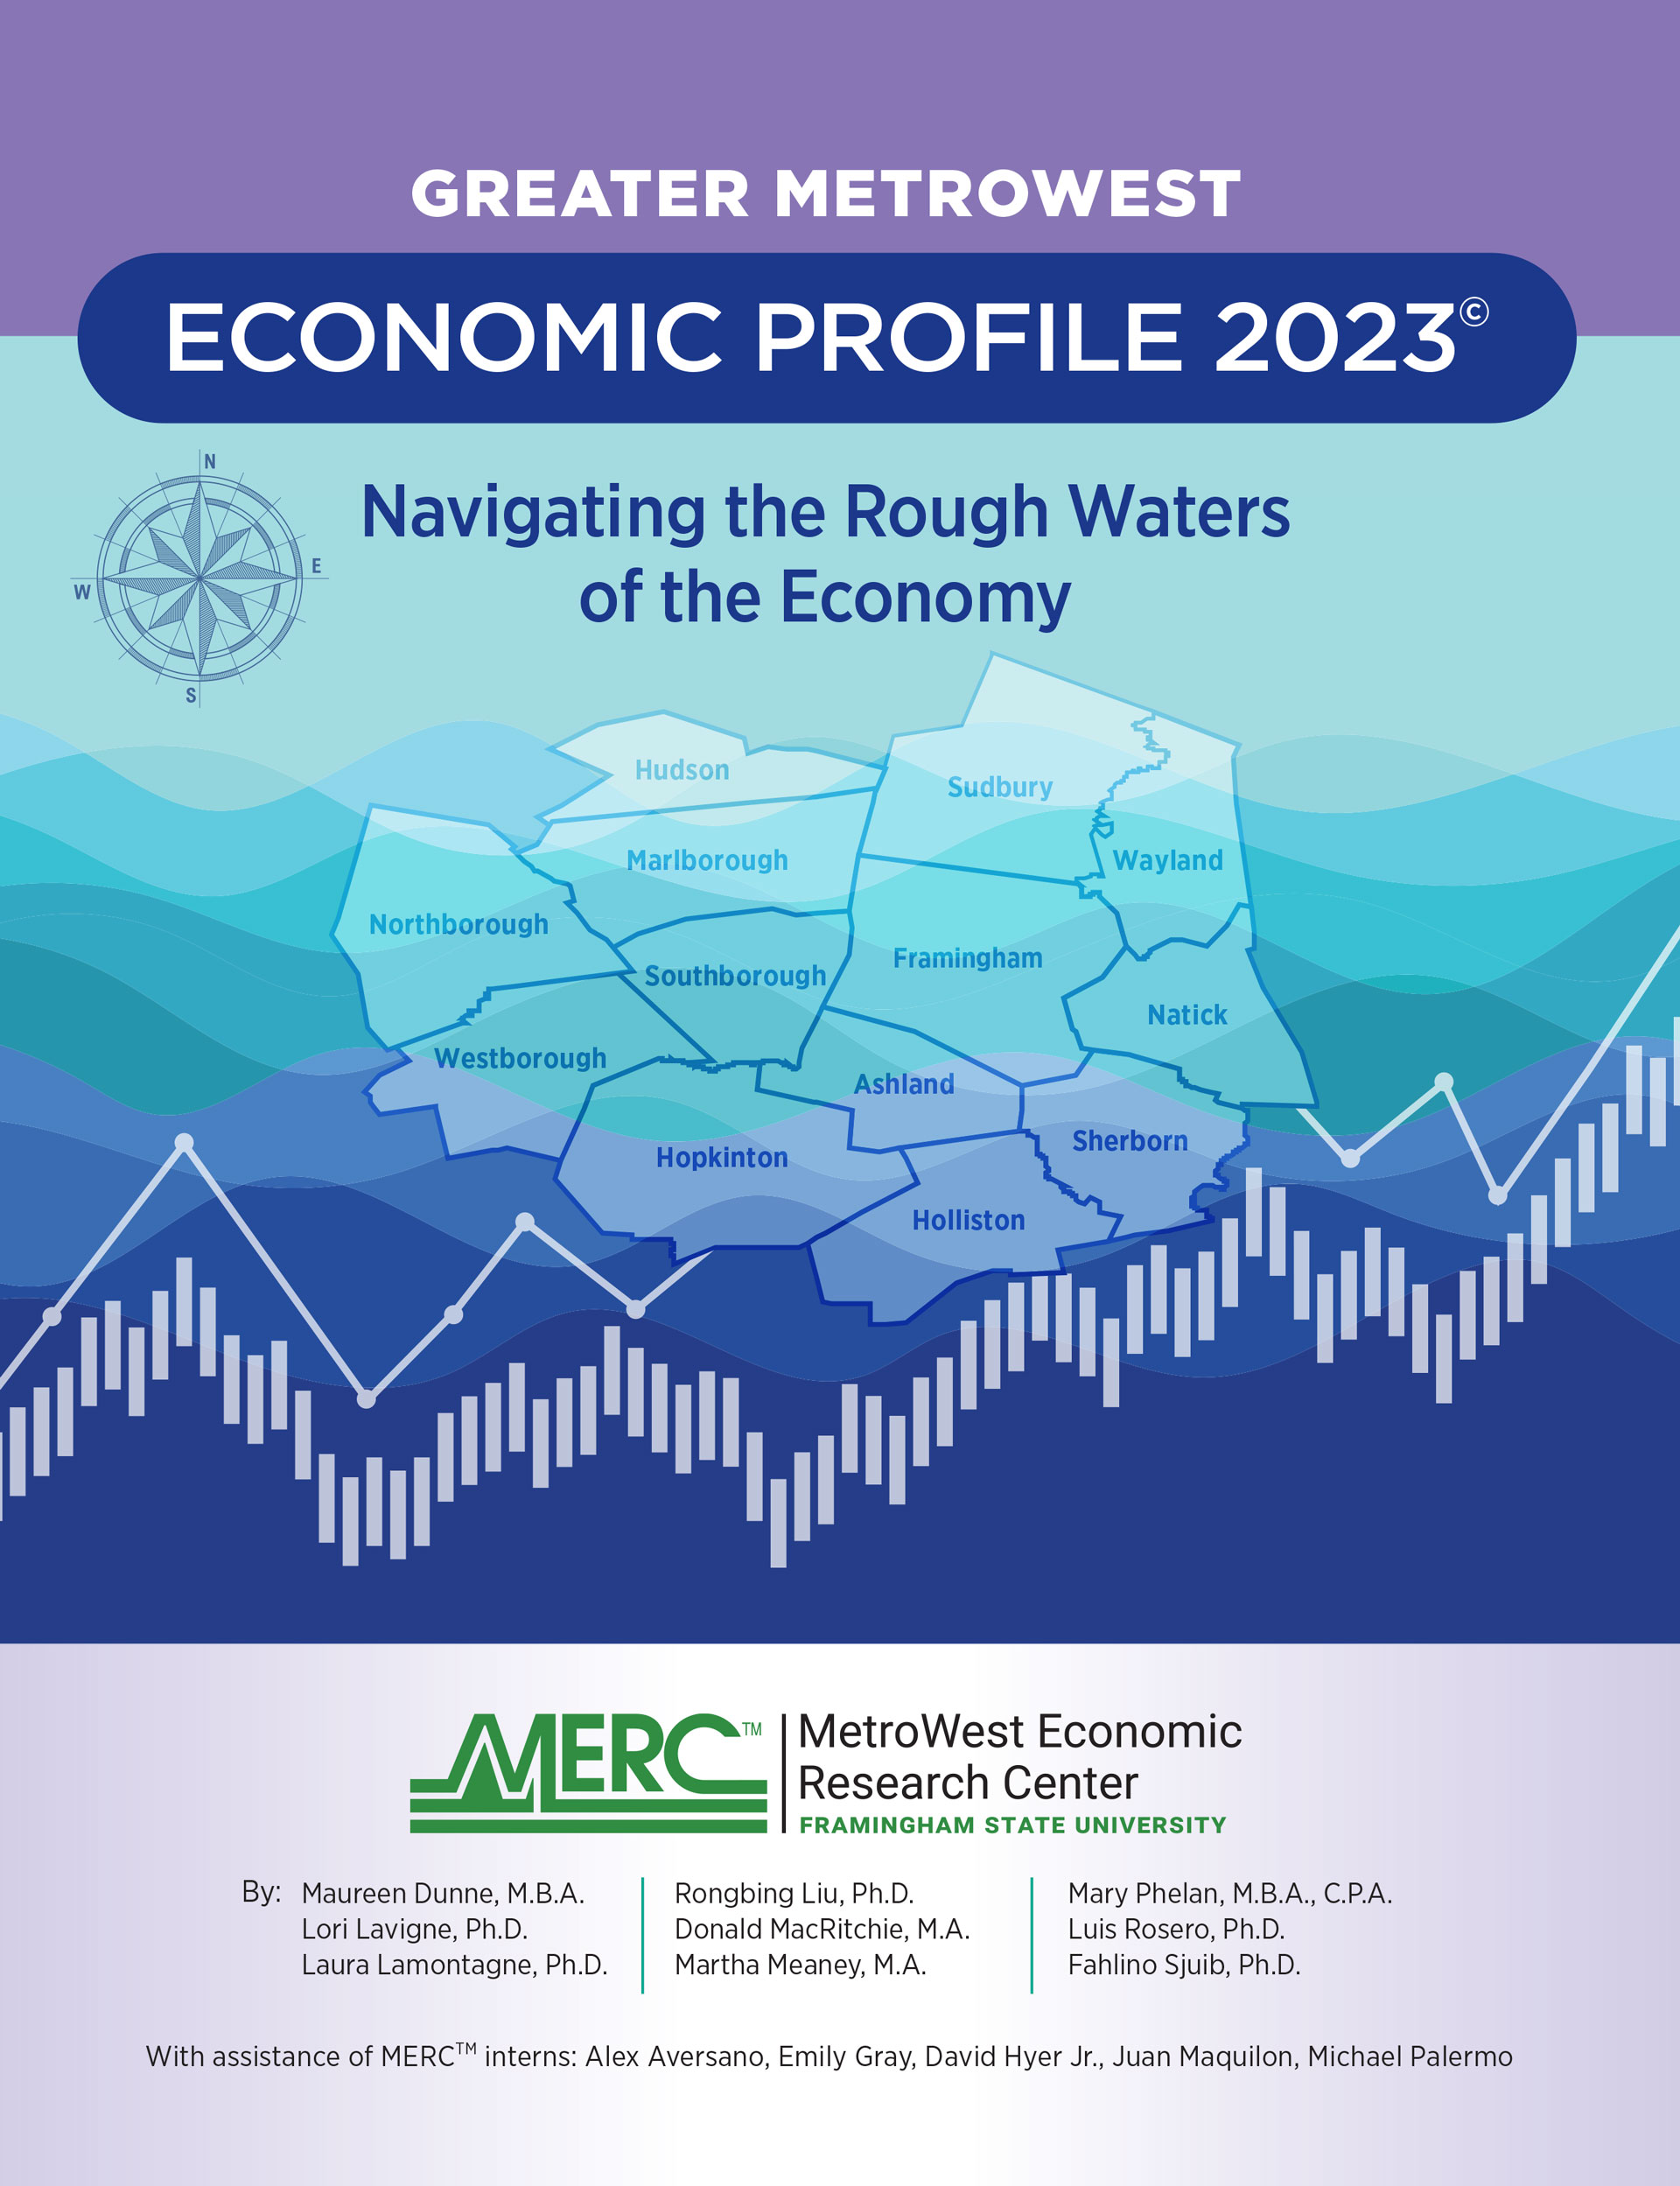 Greater Metrowest Economic Profile 2022